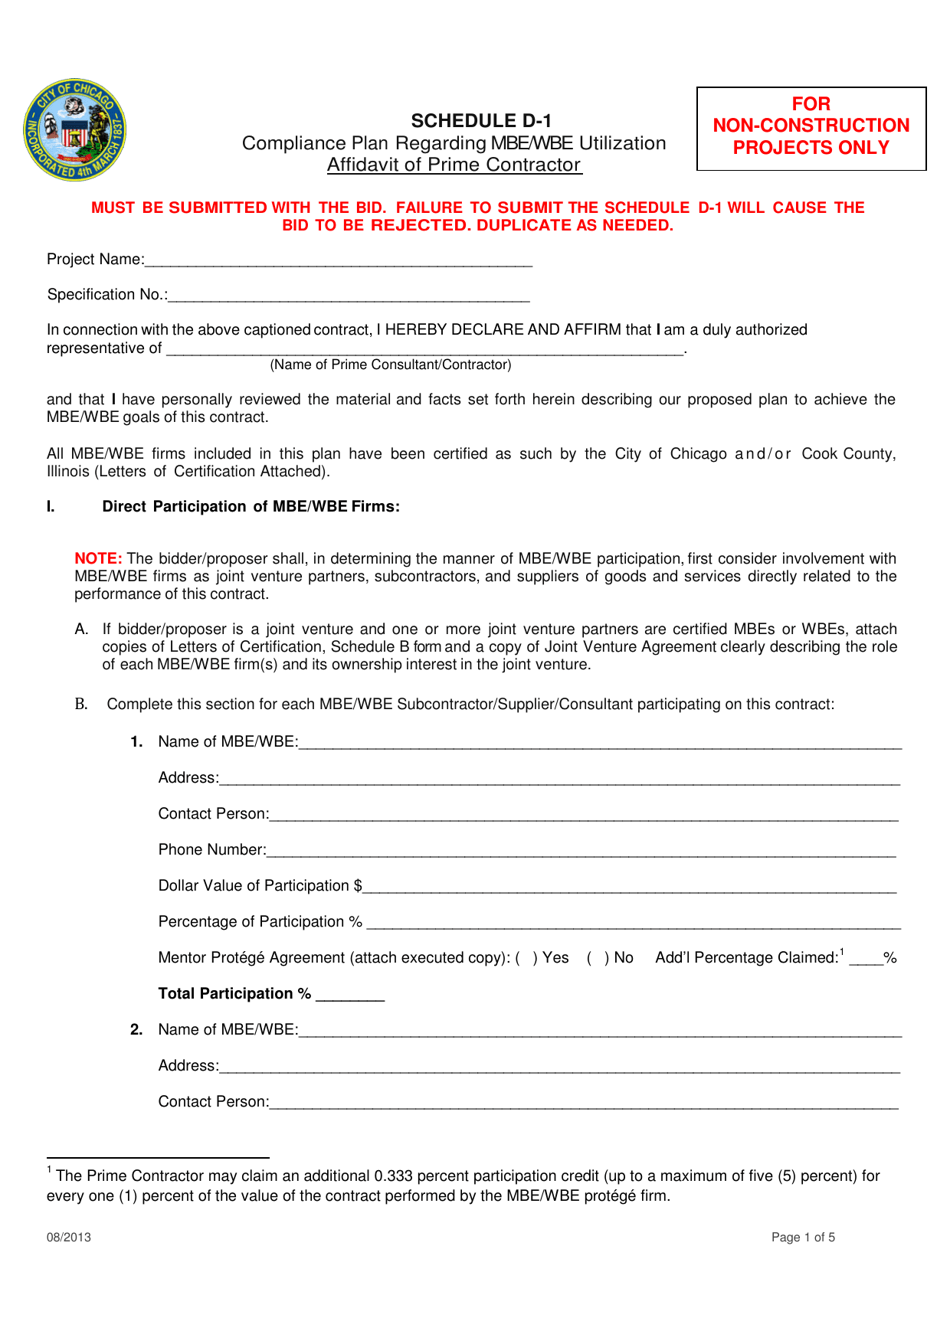 Schedule D-1 Affidavit of Prime Contractor: Compliance Plan Regarding Mbe / Wbe Utilization - City of Chicago, Illinois, Page 1